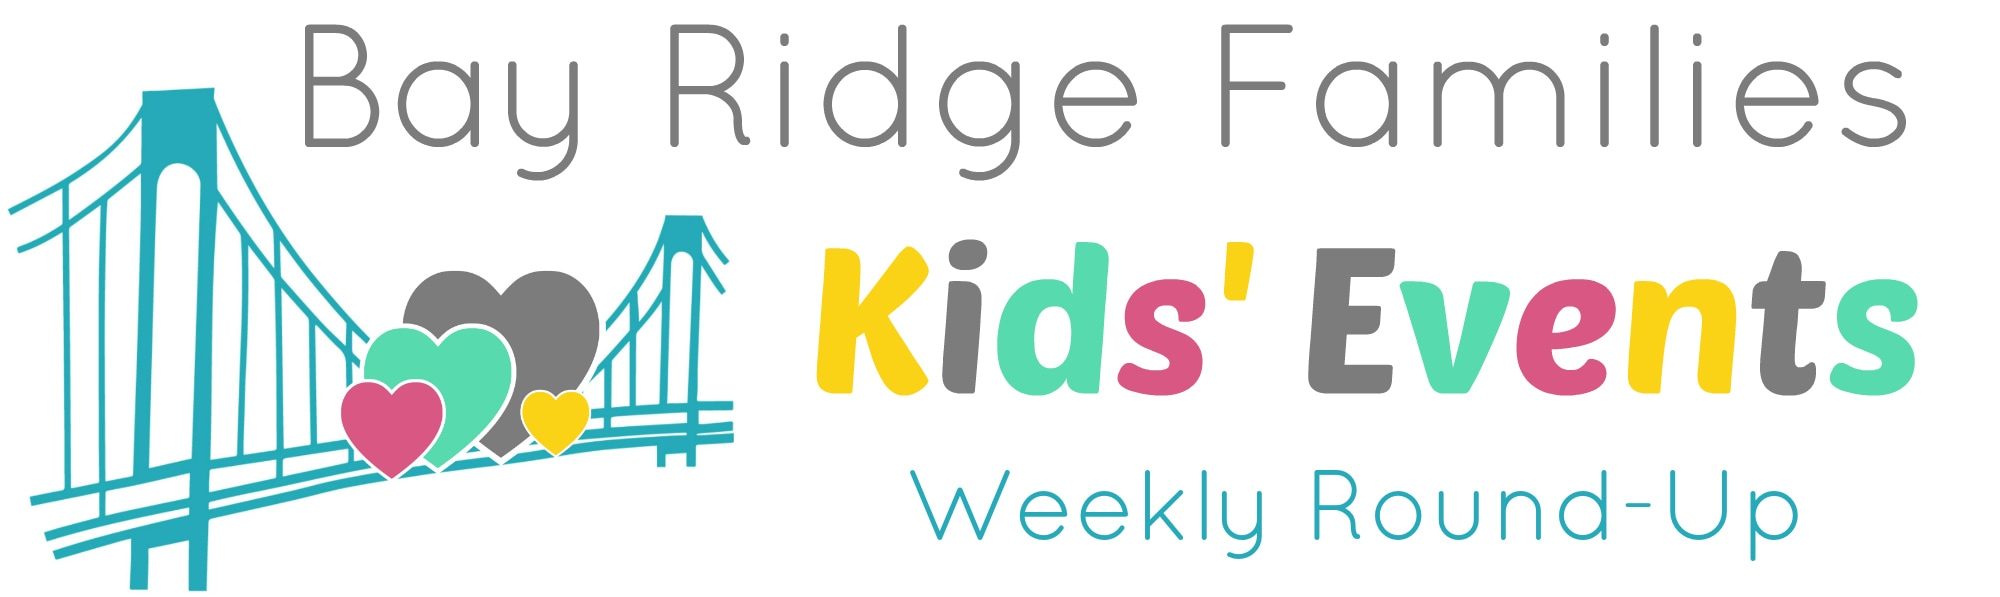 Bay Ridge Brooklyn area kids events roundup: June 21 - 27